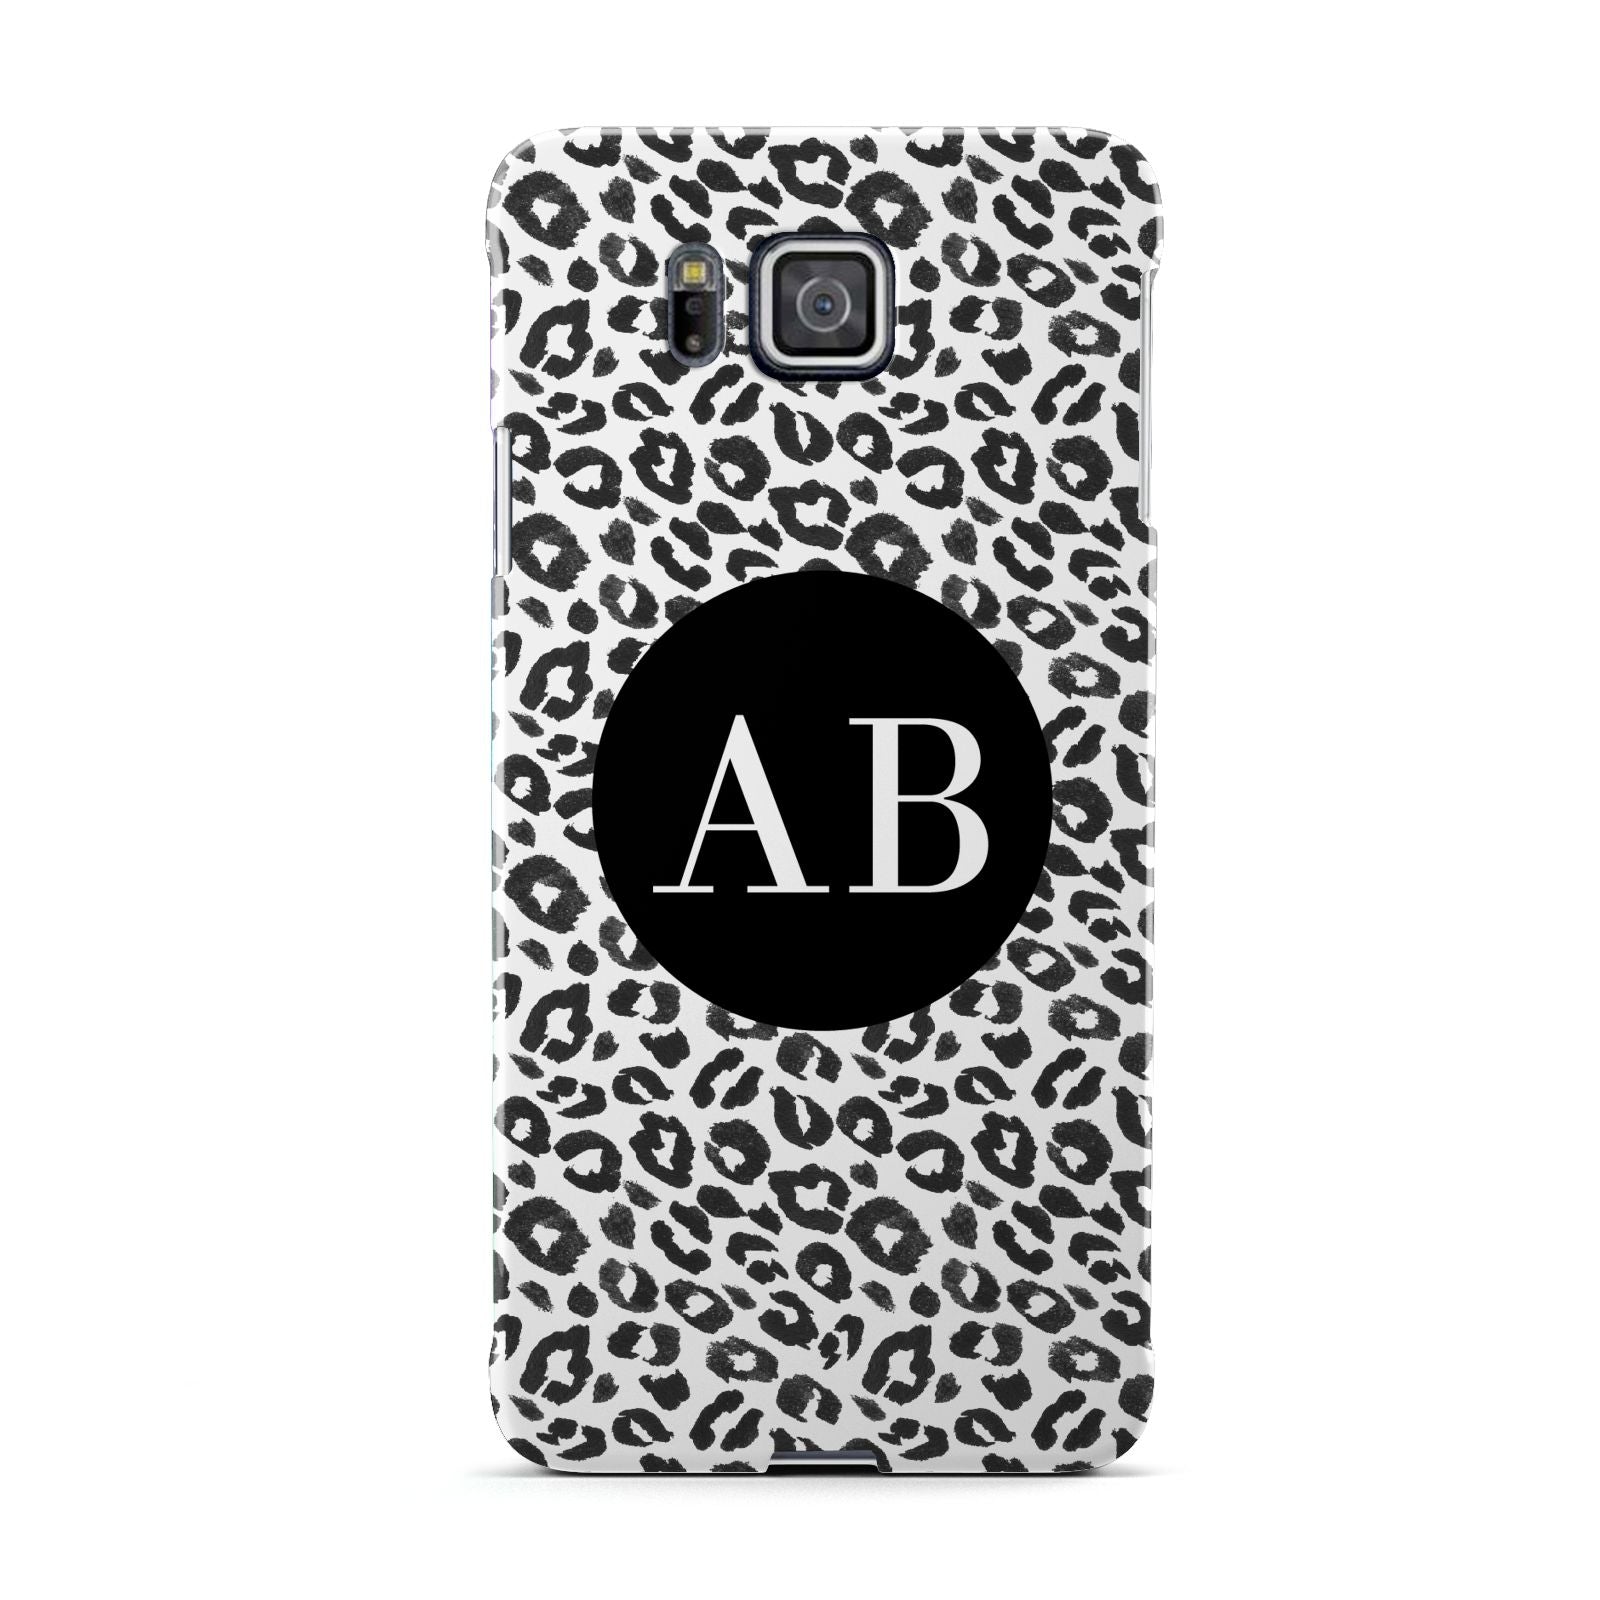 Leopard Print Black and White Samsung Galaxy Alpha Case